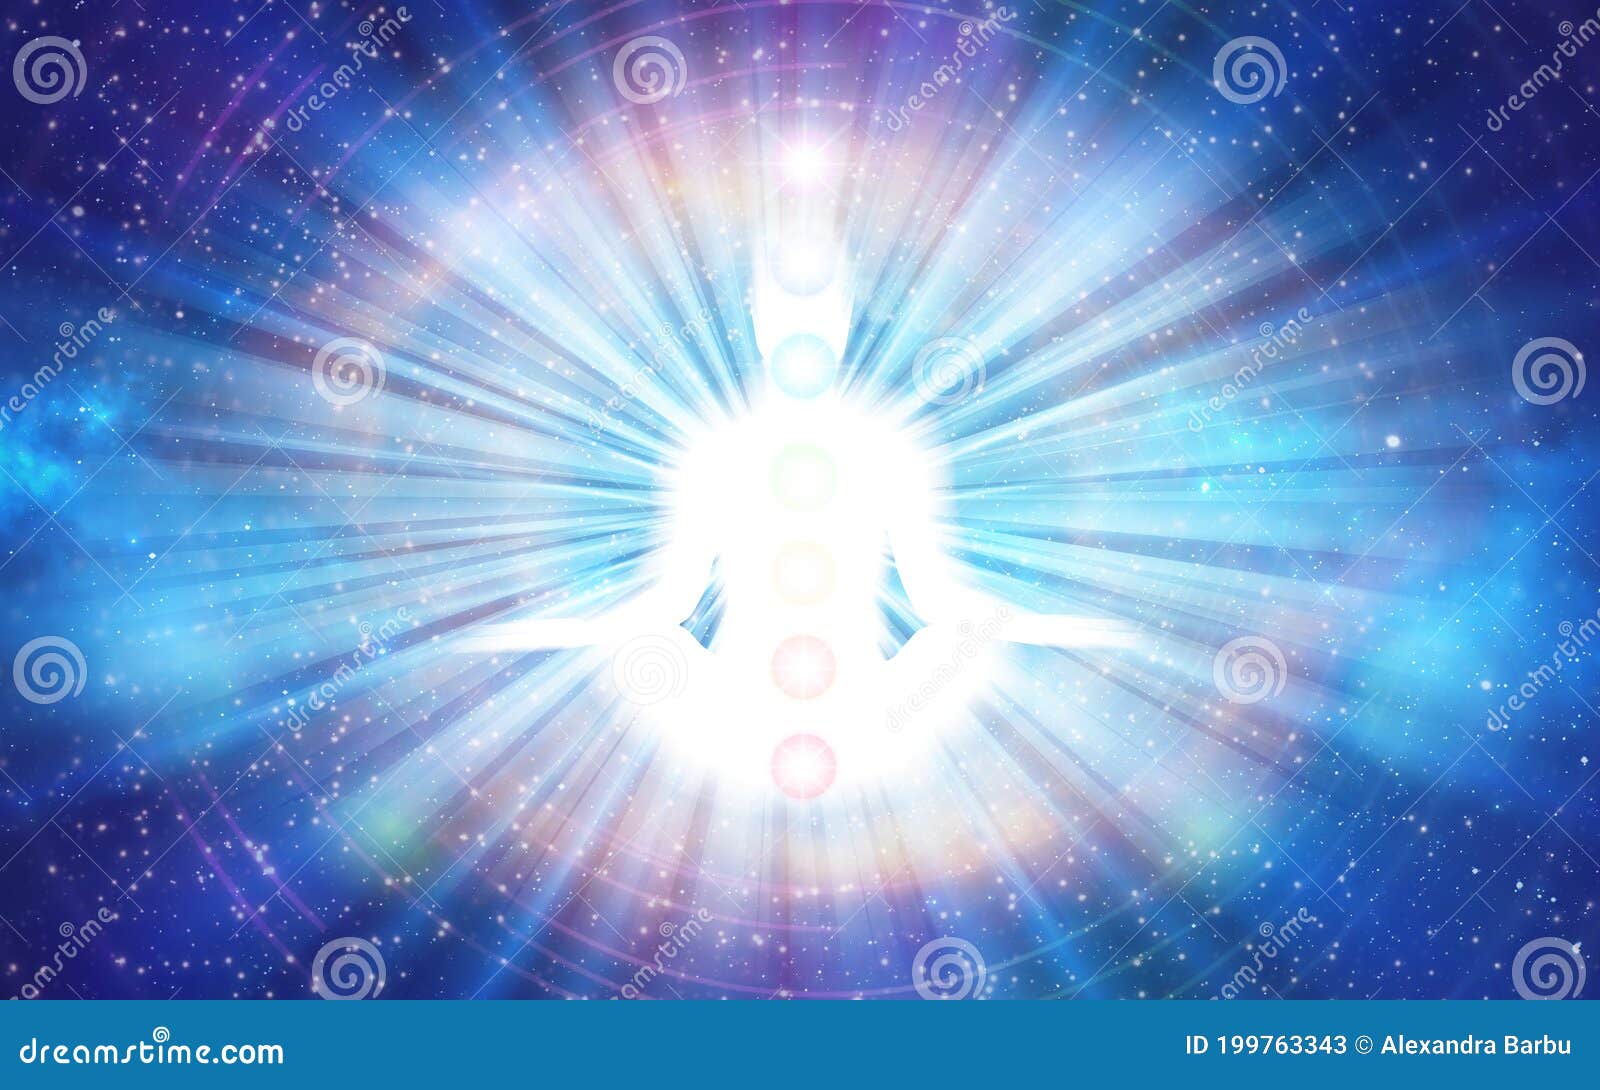 man universe, meditation, healing, human body energy beams